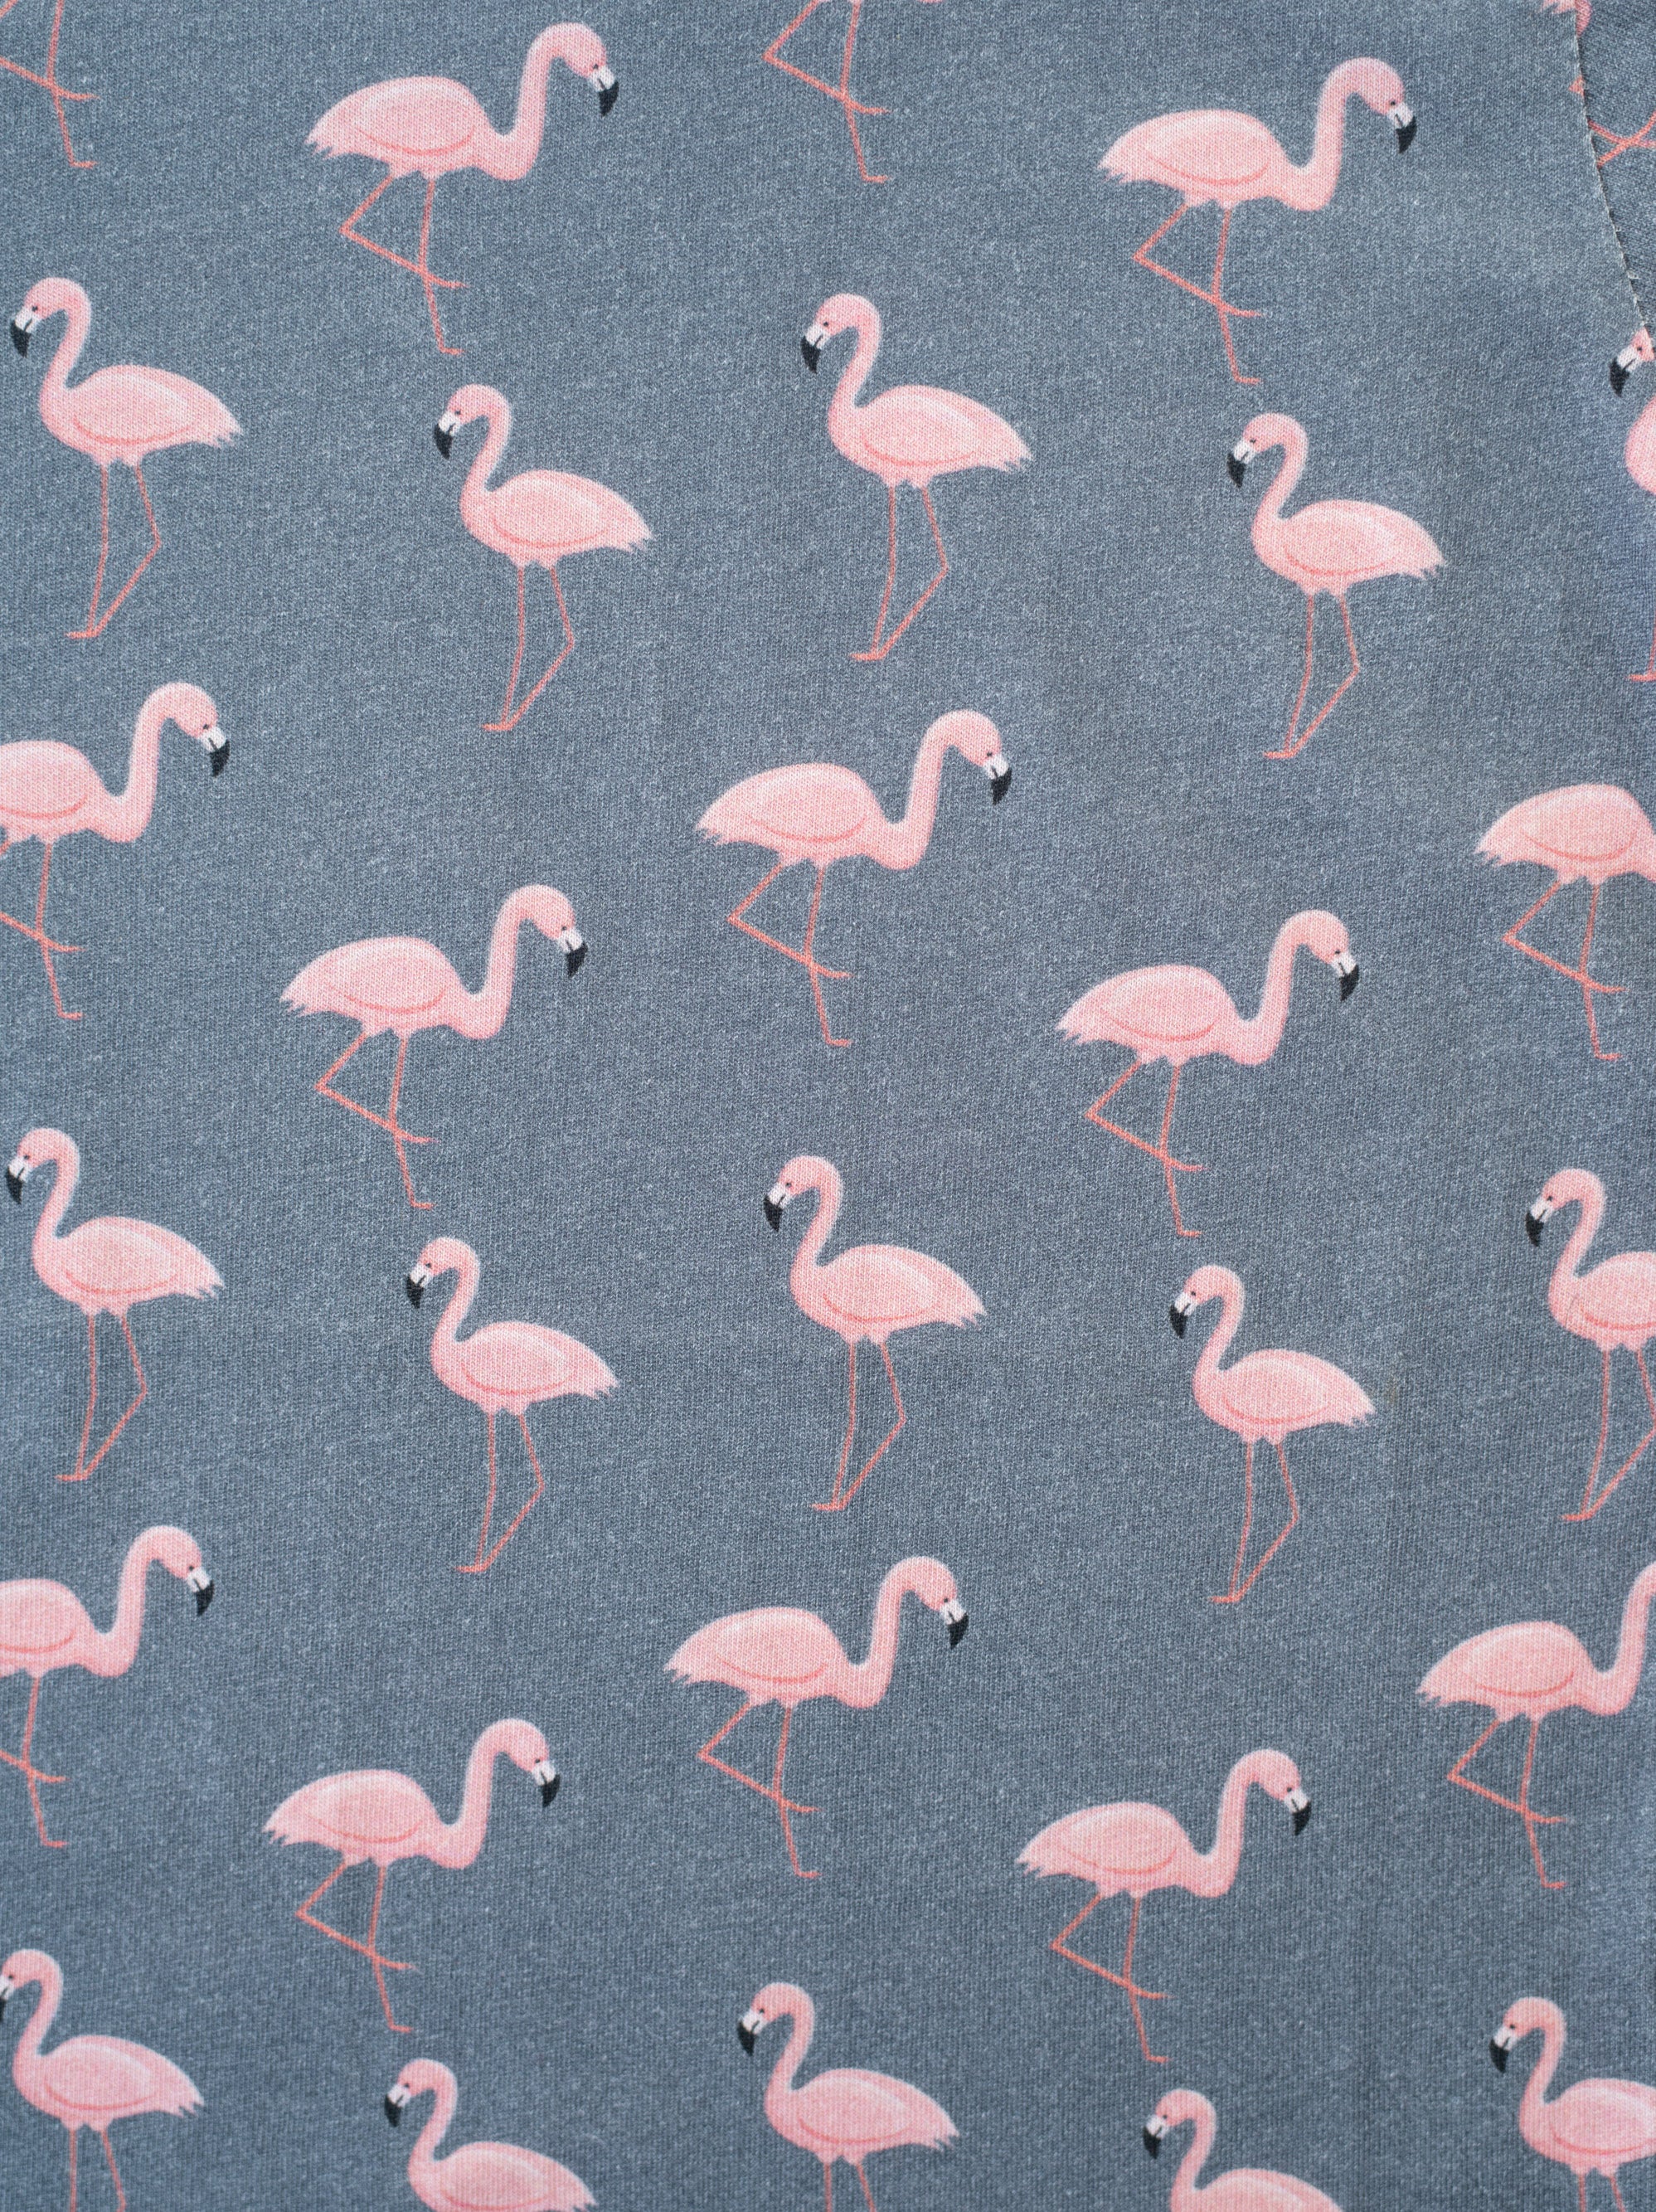 Flamingo- Animal Planet